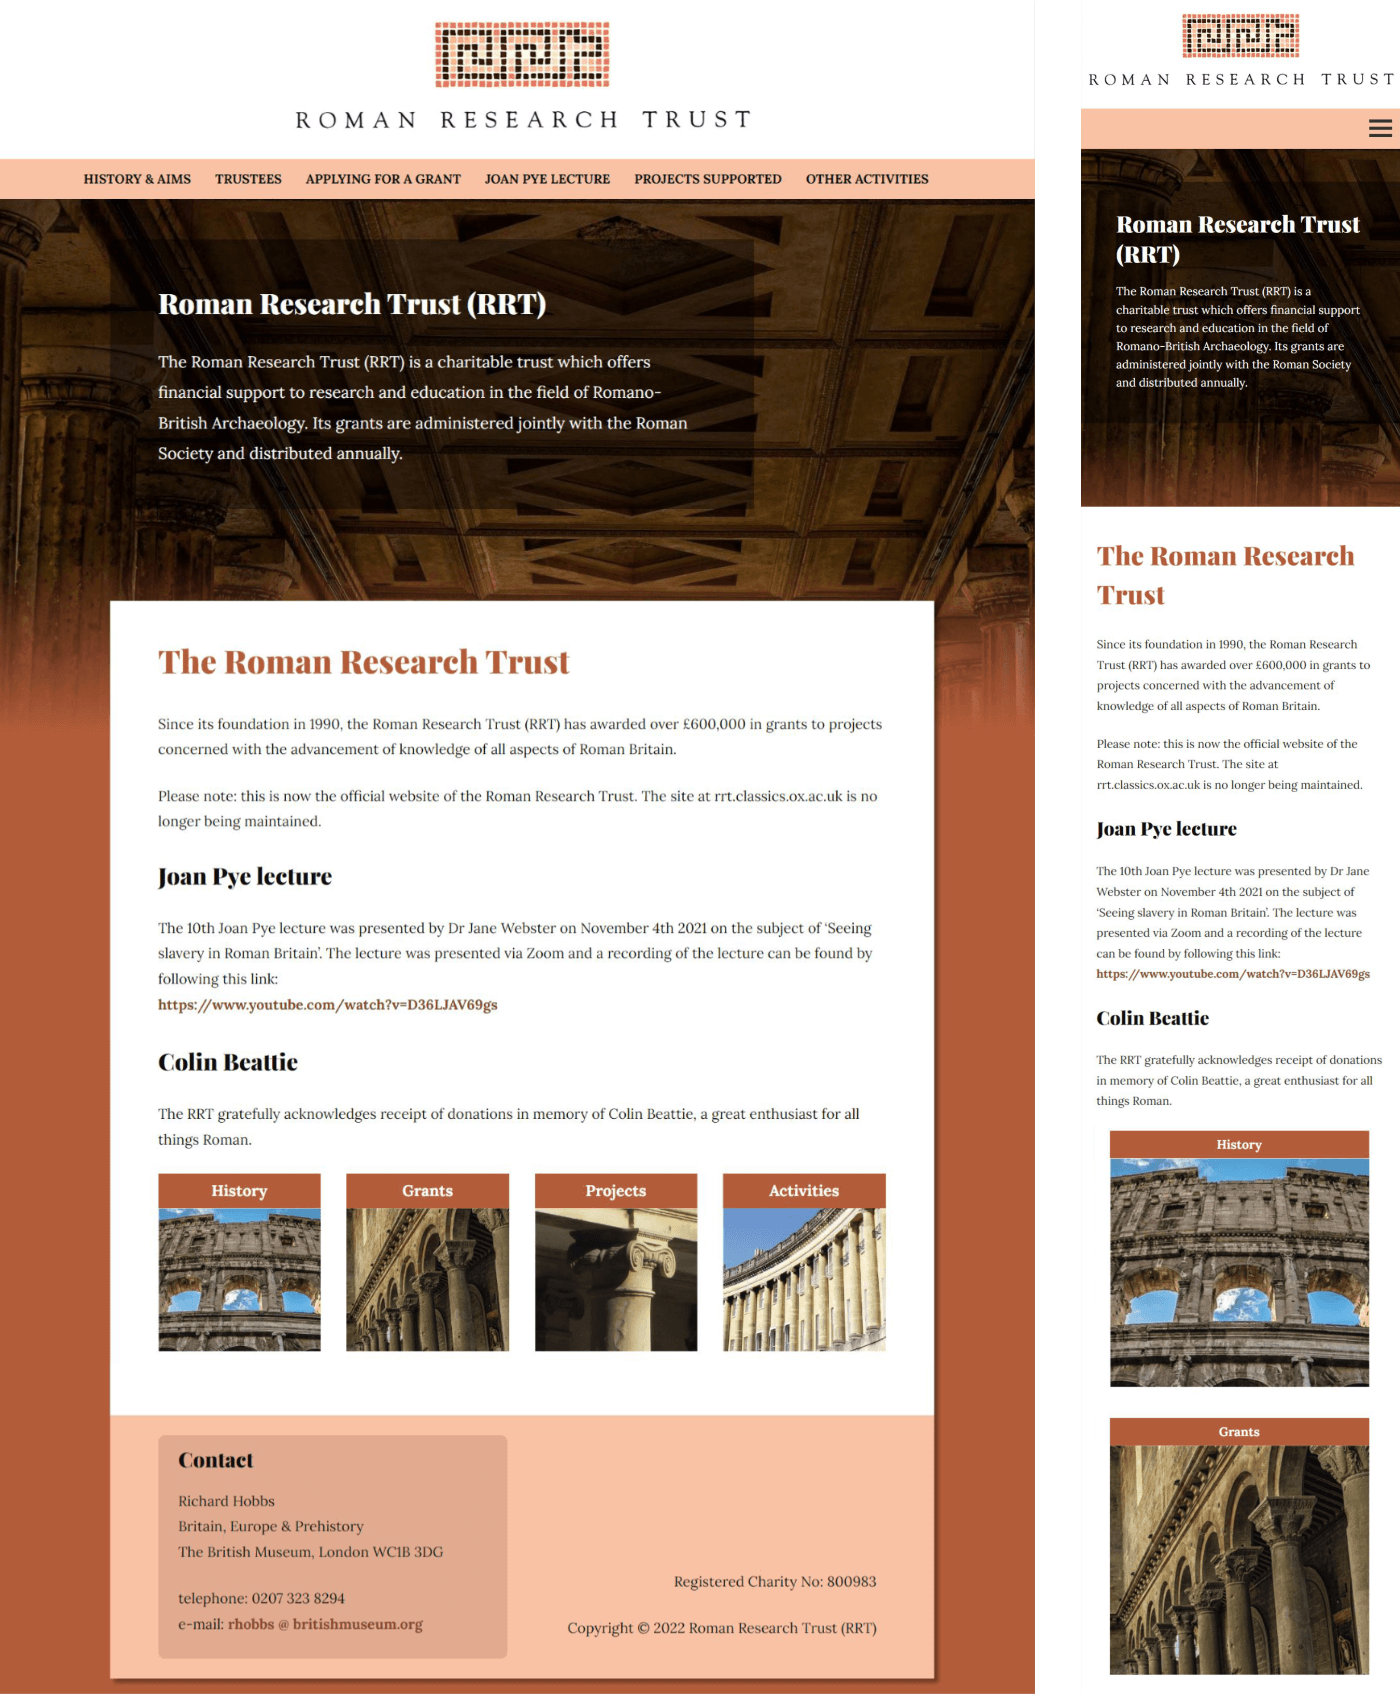 Roman Research Trust website design screenshot